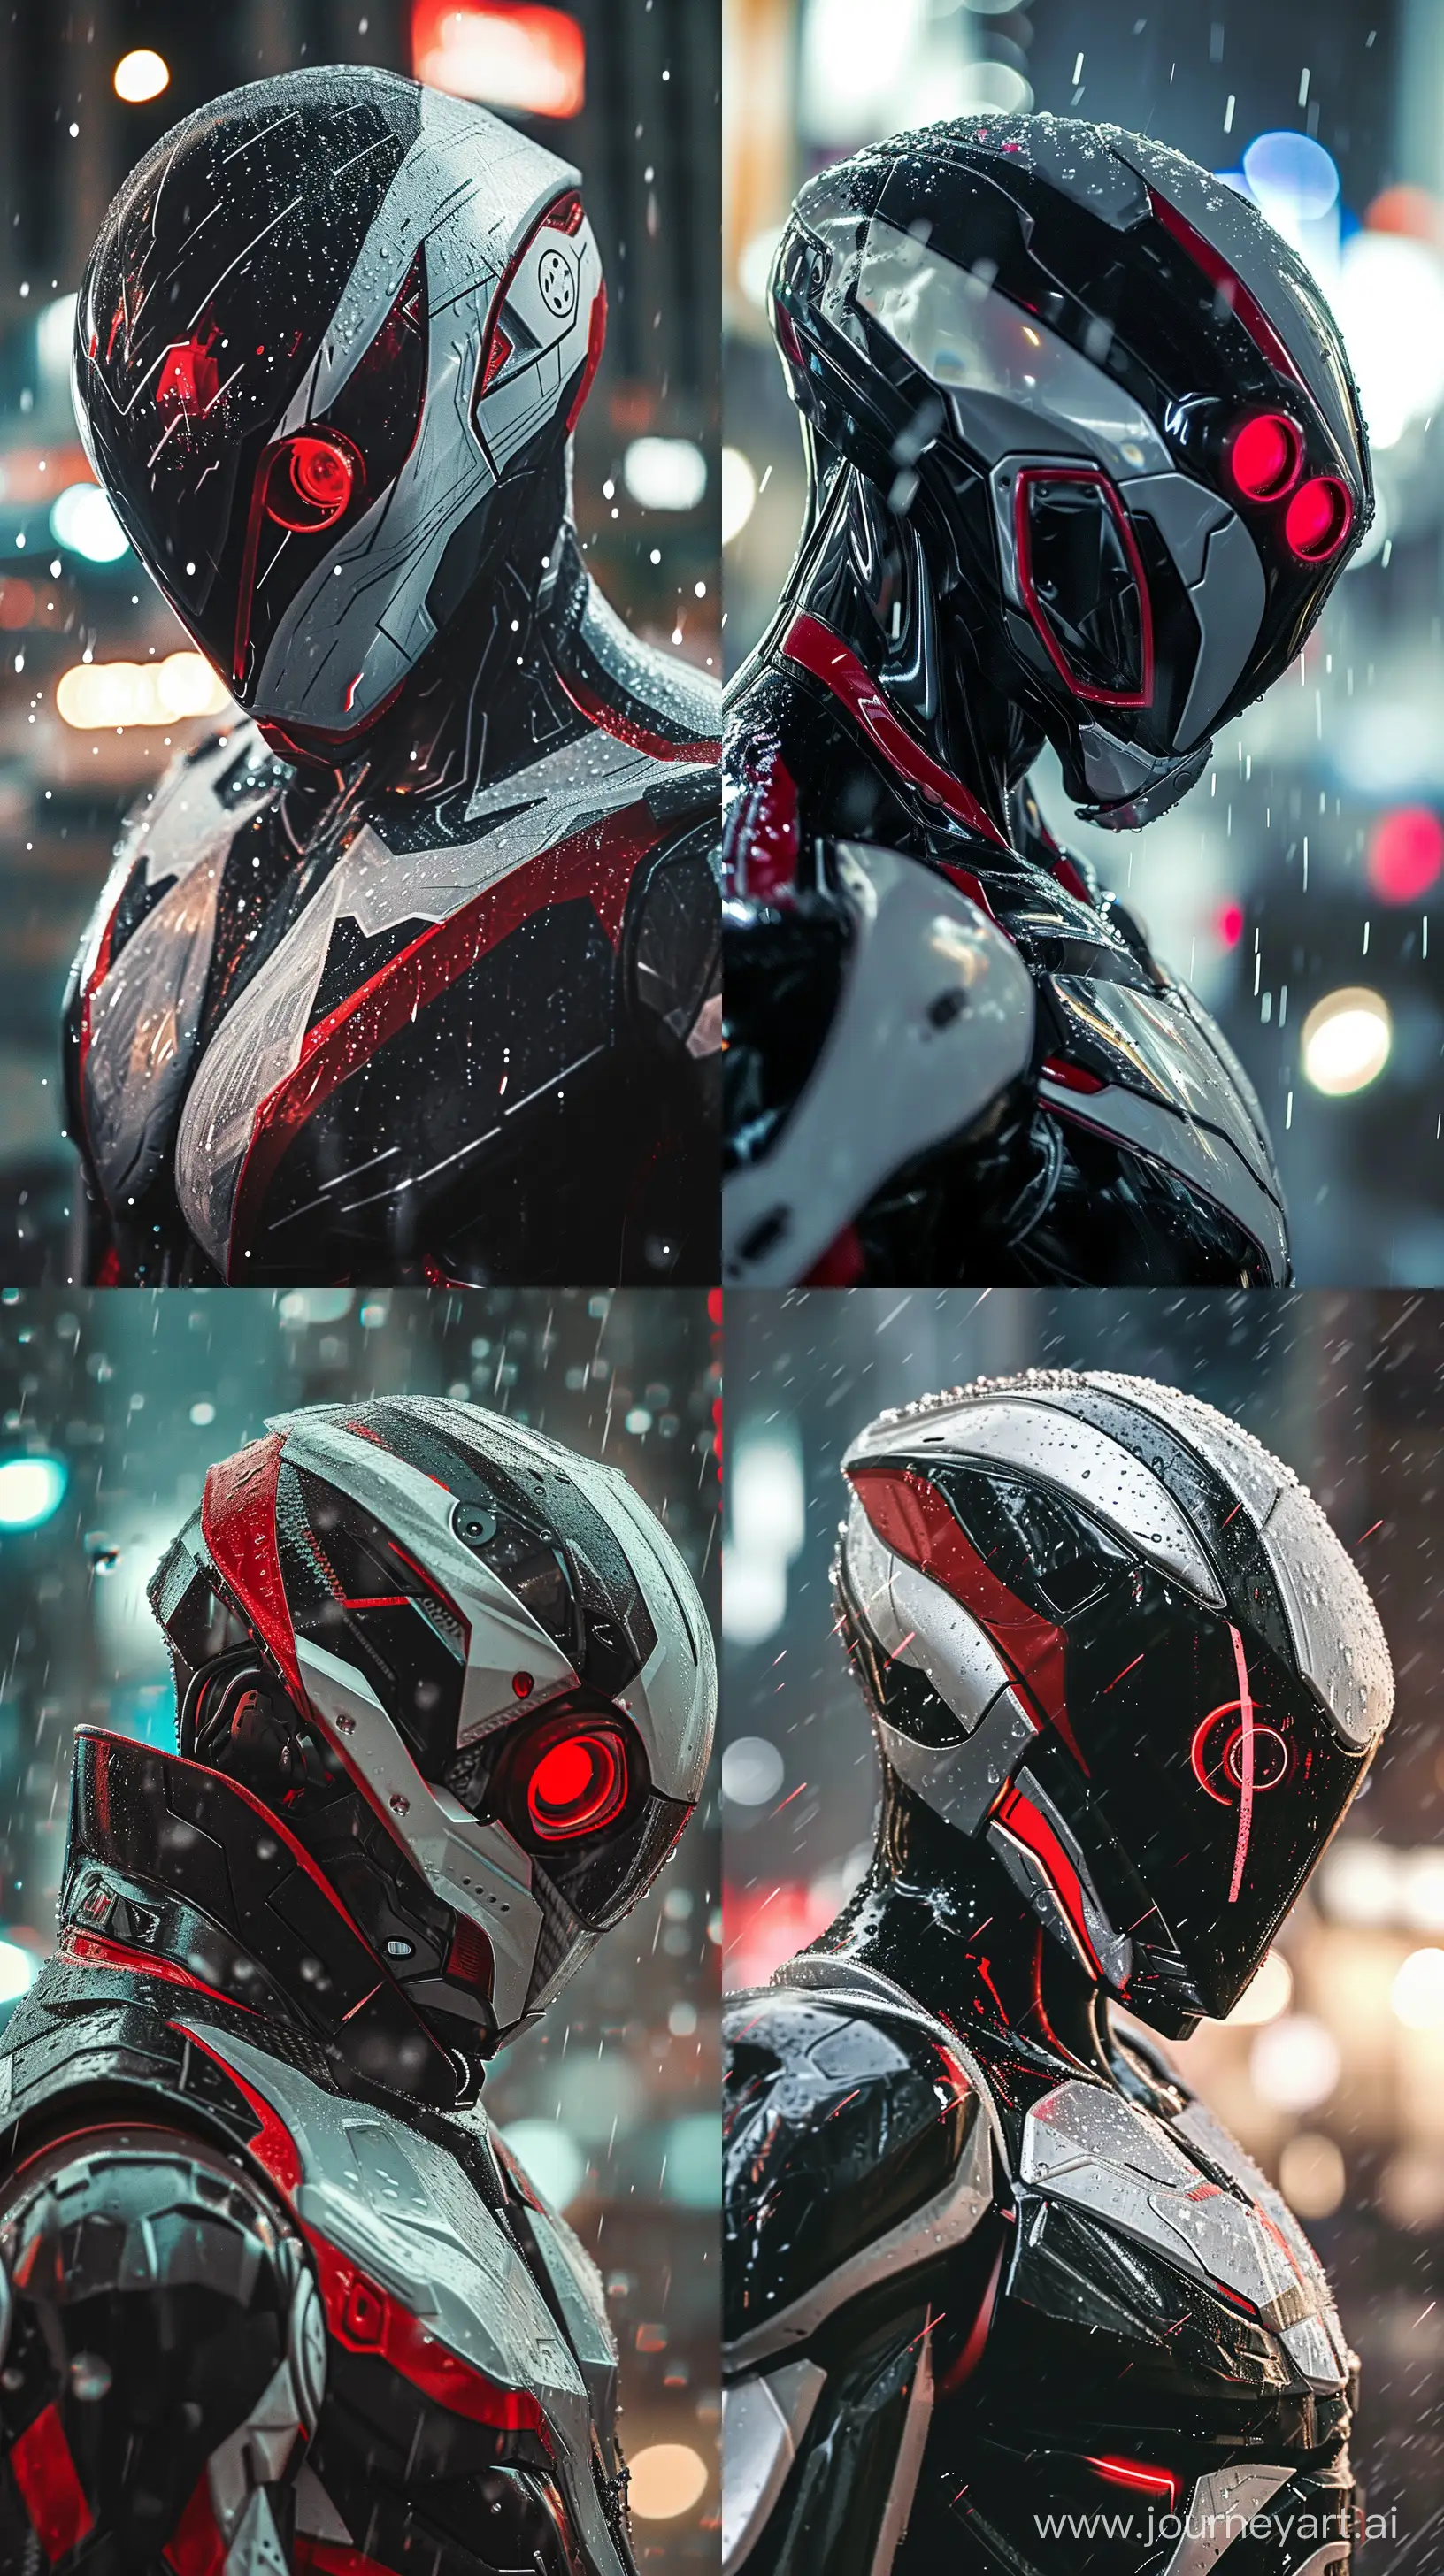 Futuristic-Red-and-White-Armor-in-Rainy-Urban-Night